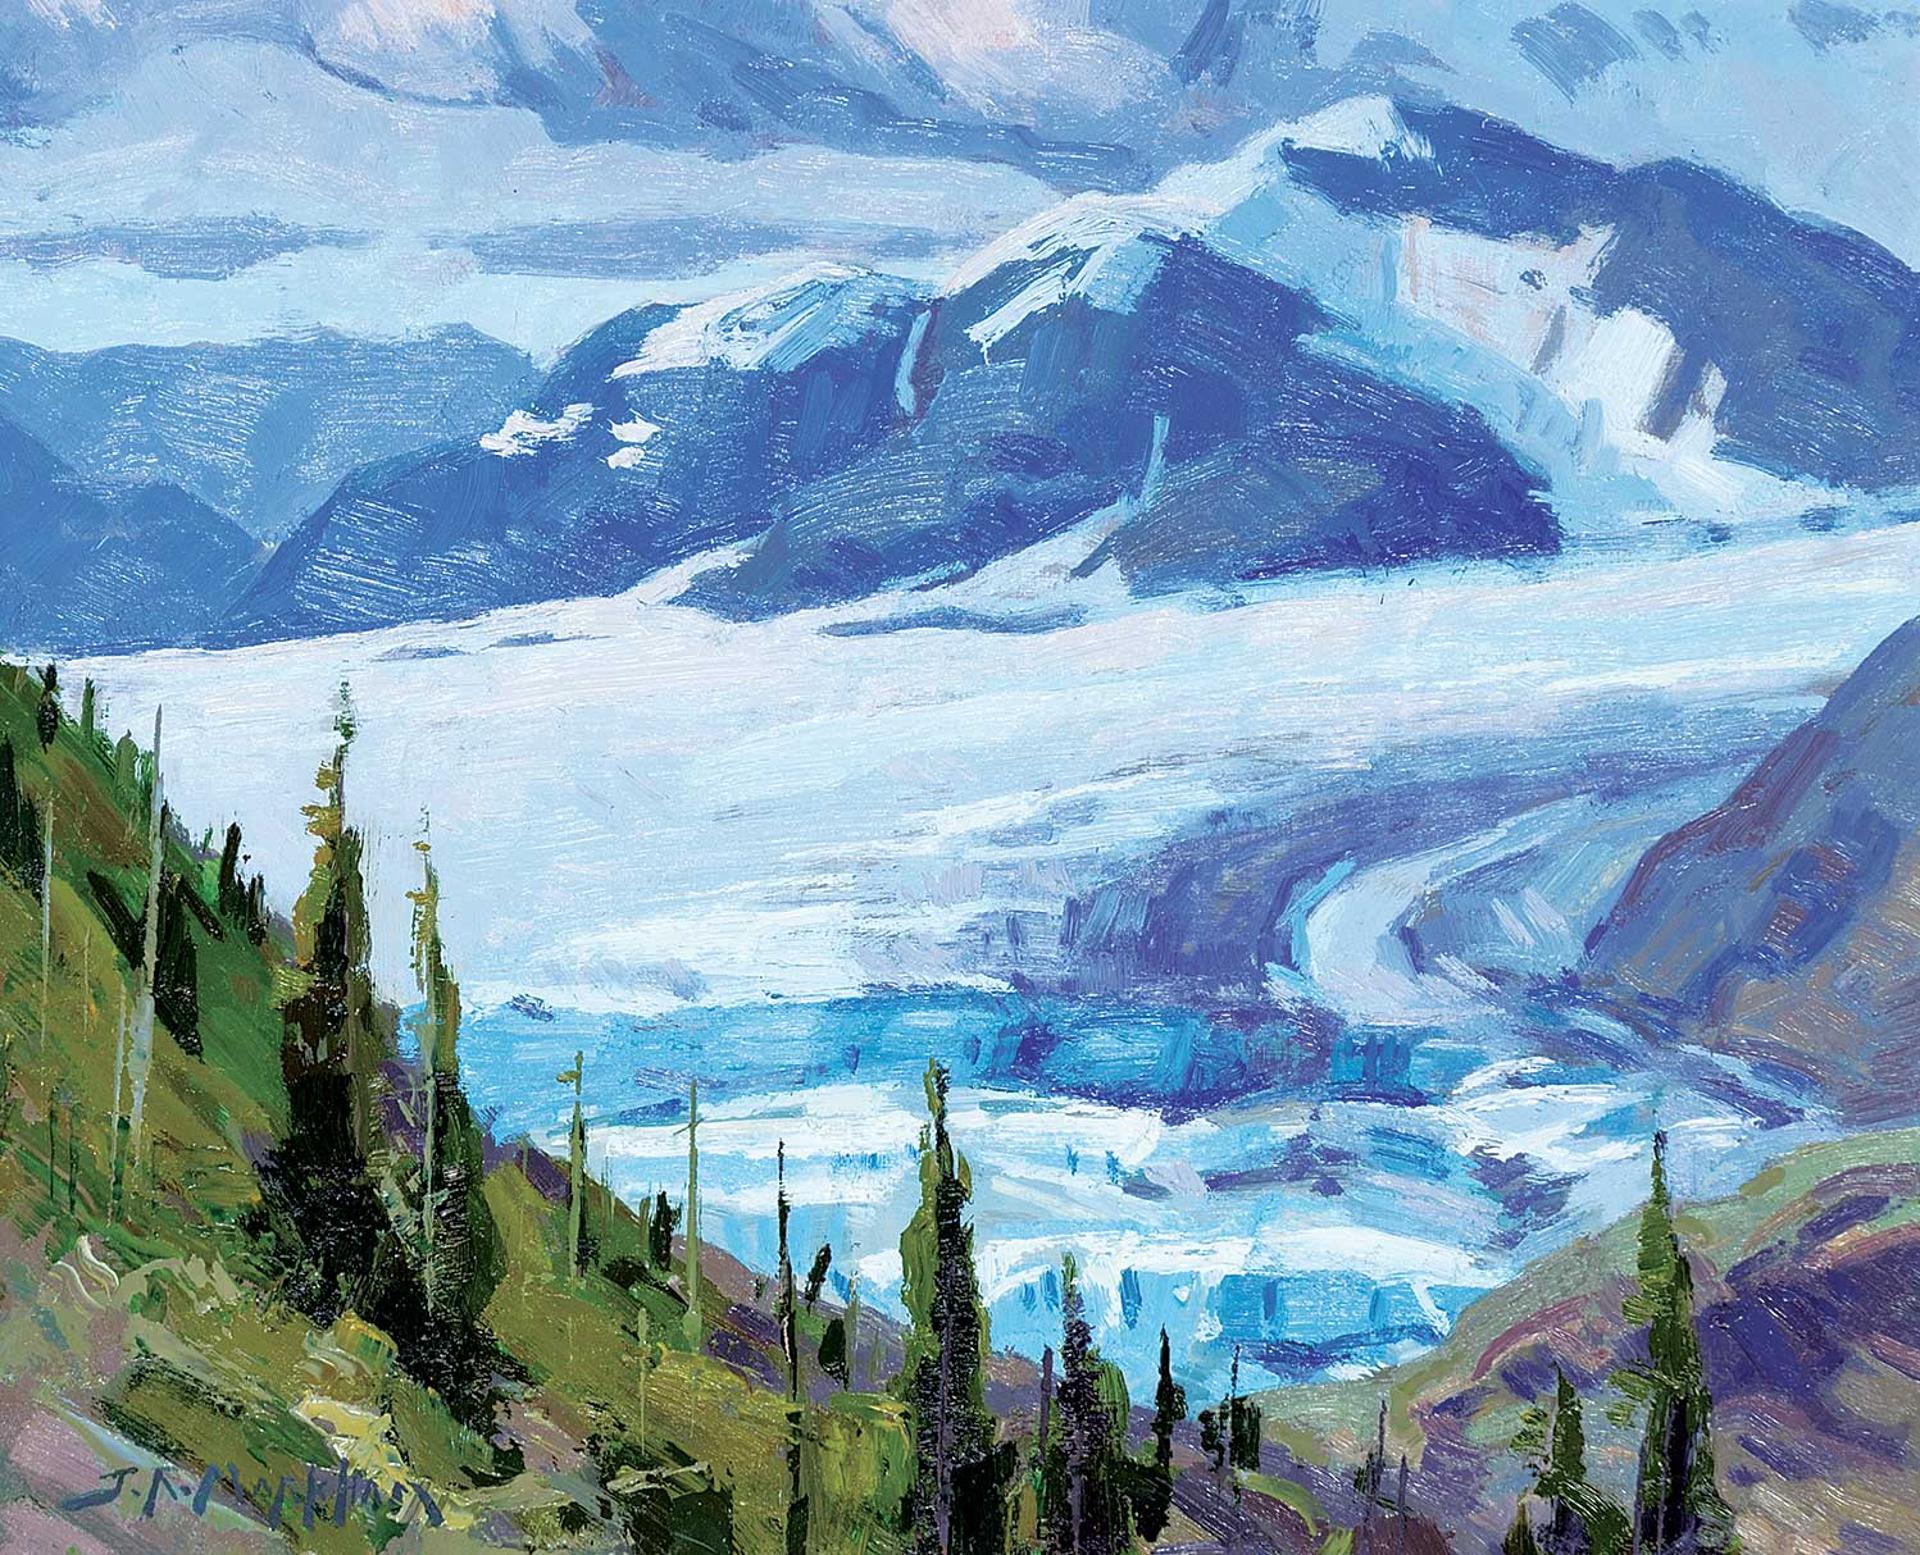 Jerry R. Markham (1978) - The Toe of Salmon Glacier